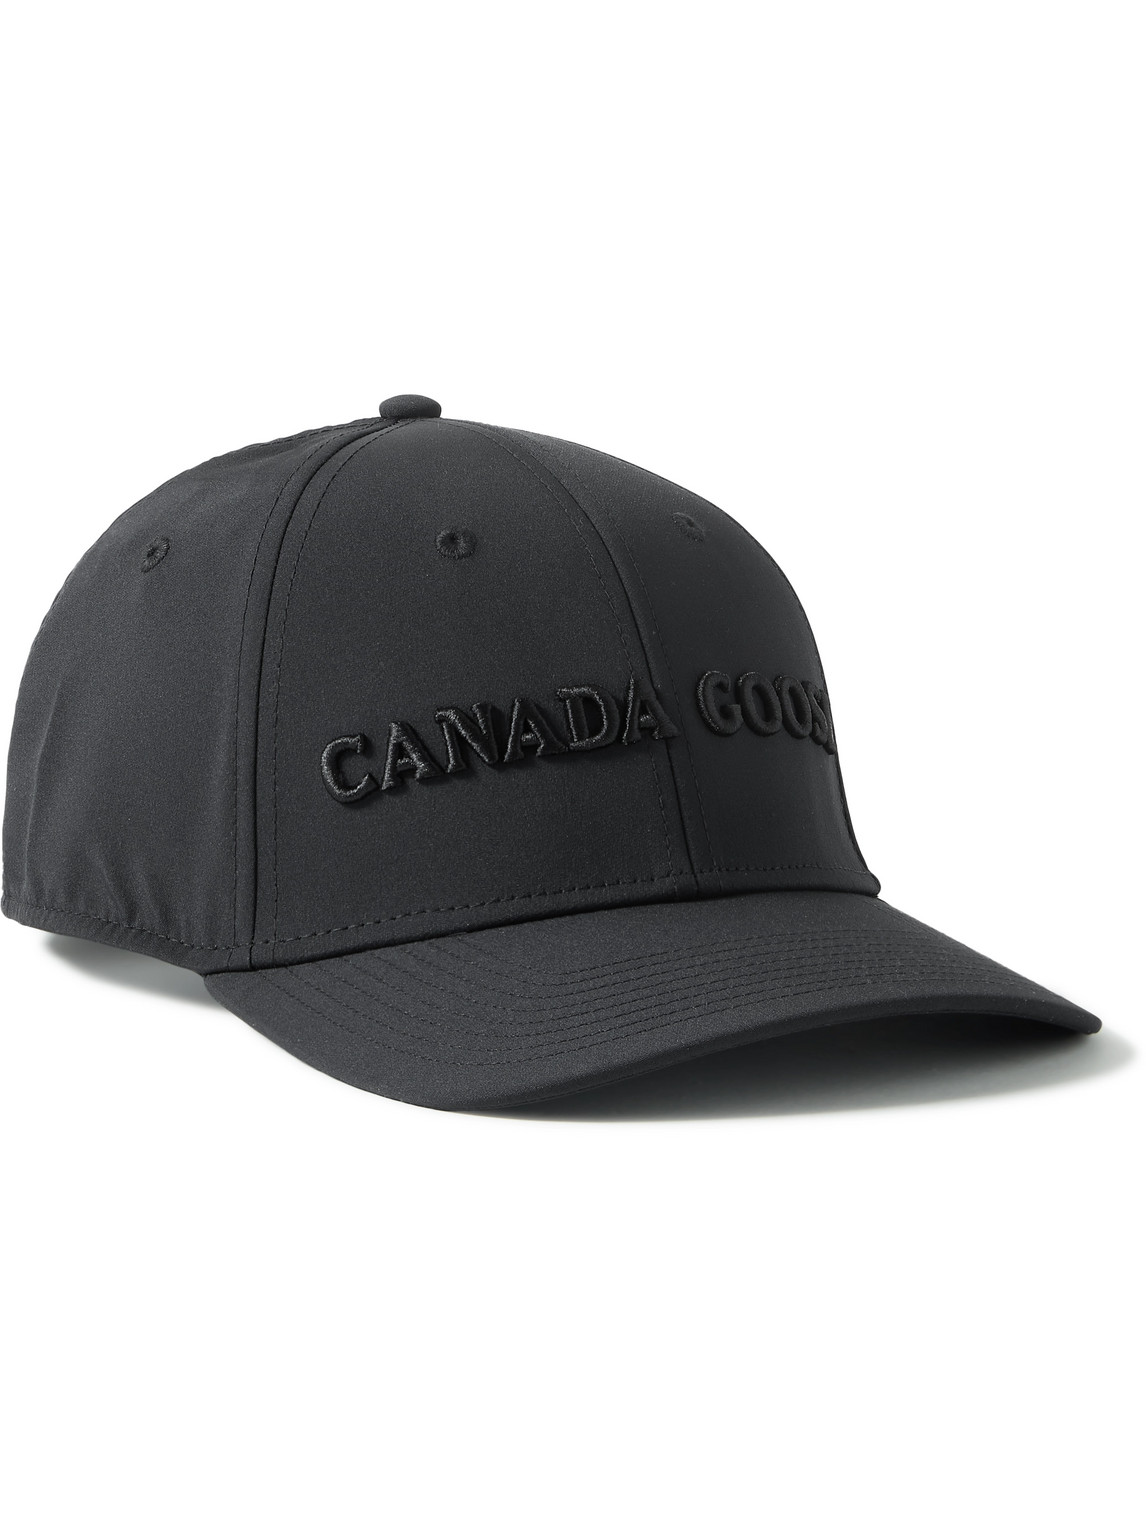 Canada Goose - Logo-Embroidered Stretch-Twill Baseball Cap - Men - Black - S/M von Canada Goose